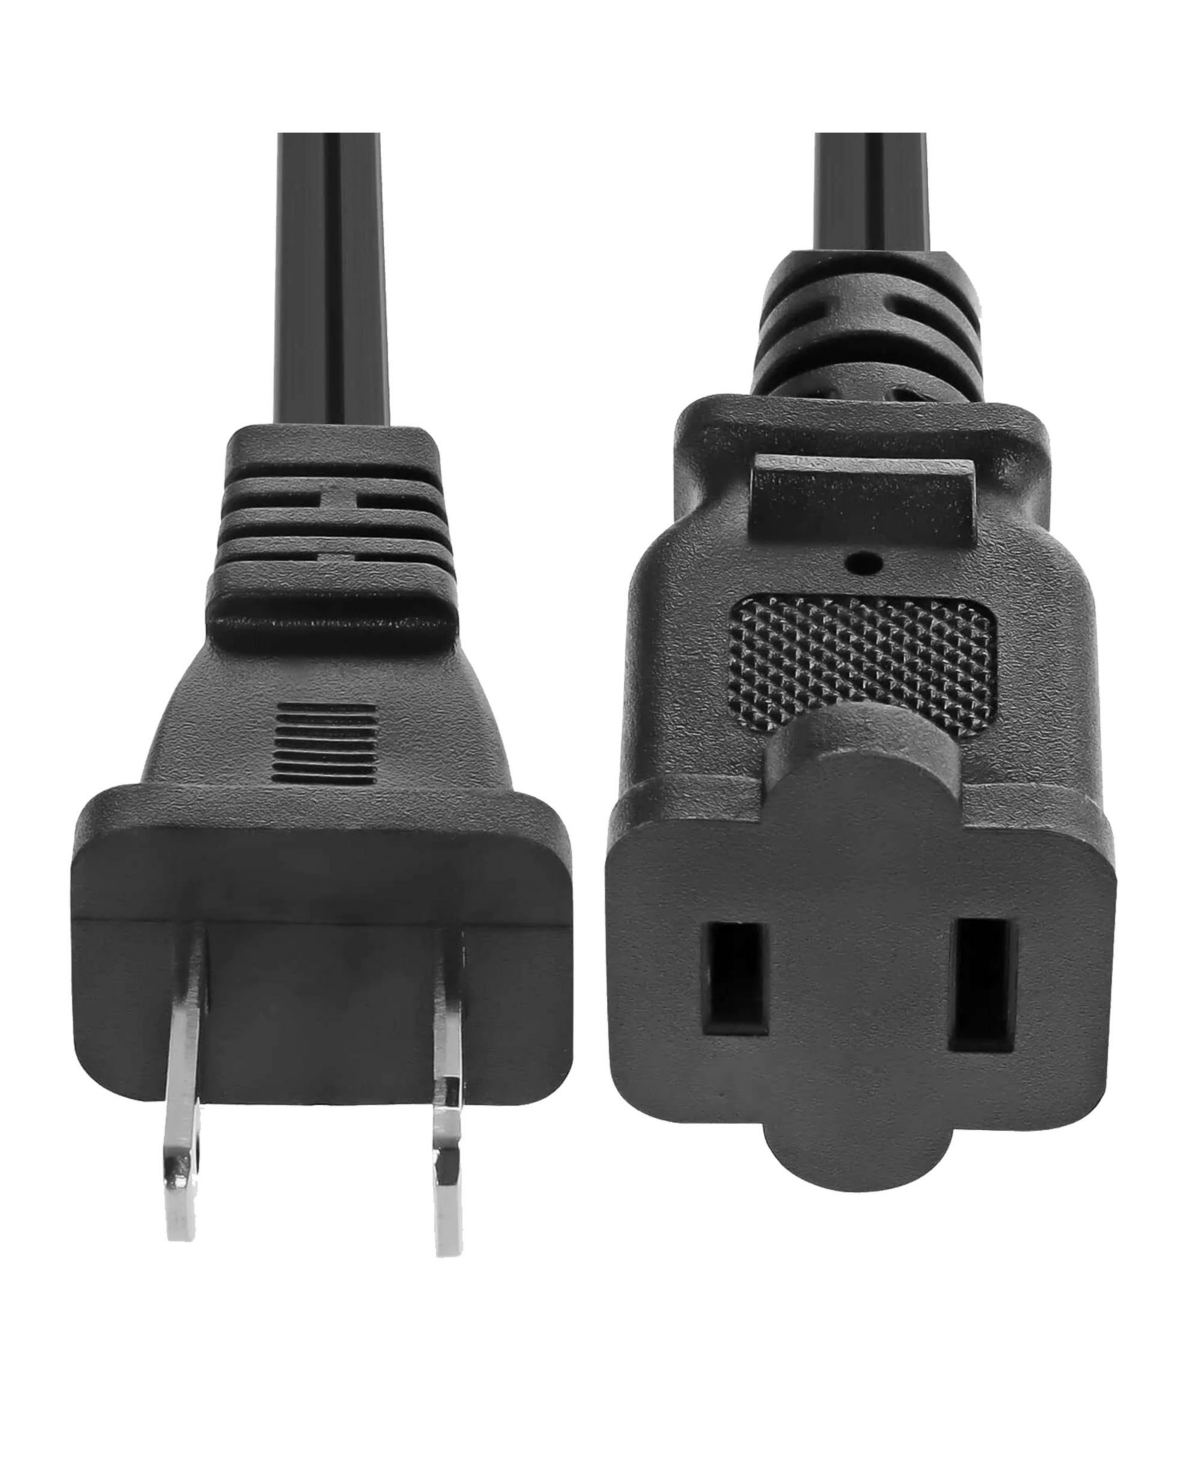 Ac Power Cord 10 Ft â¢ Us Polarized Male to Female 2 Prong Extension Adapter 16AWG/2C 125V 13A Exc Blk 12FT - Black